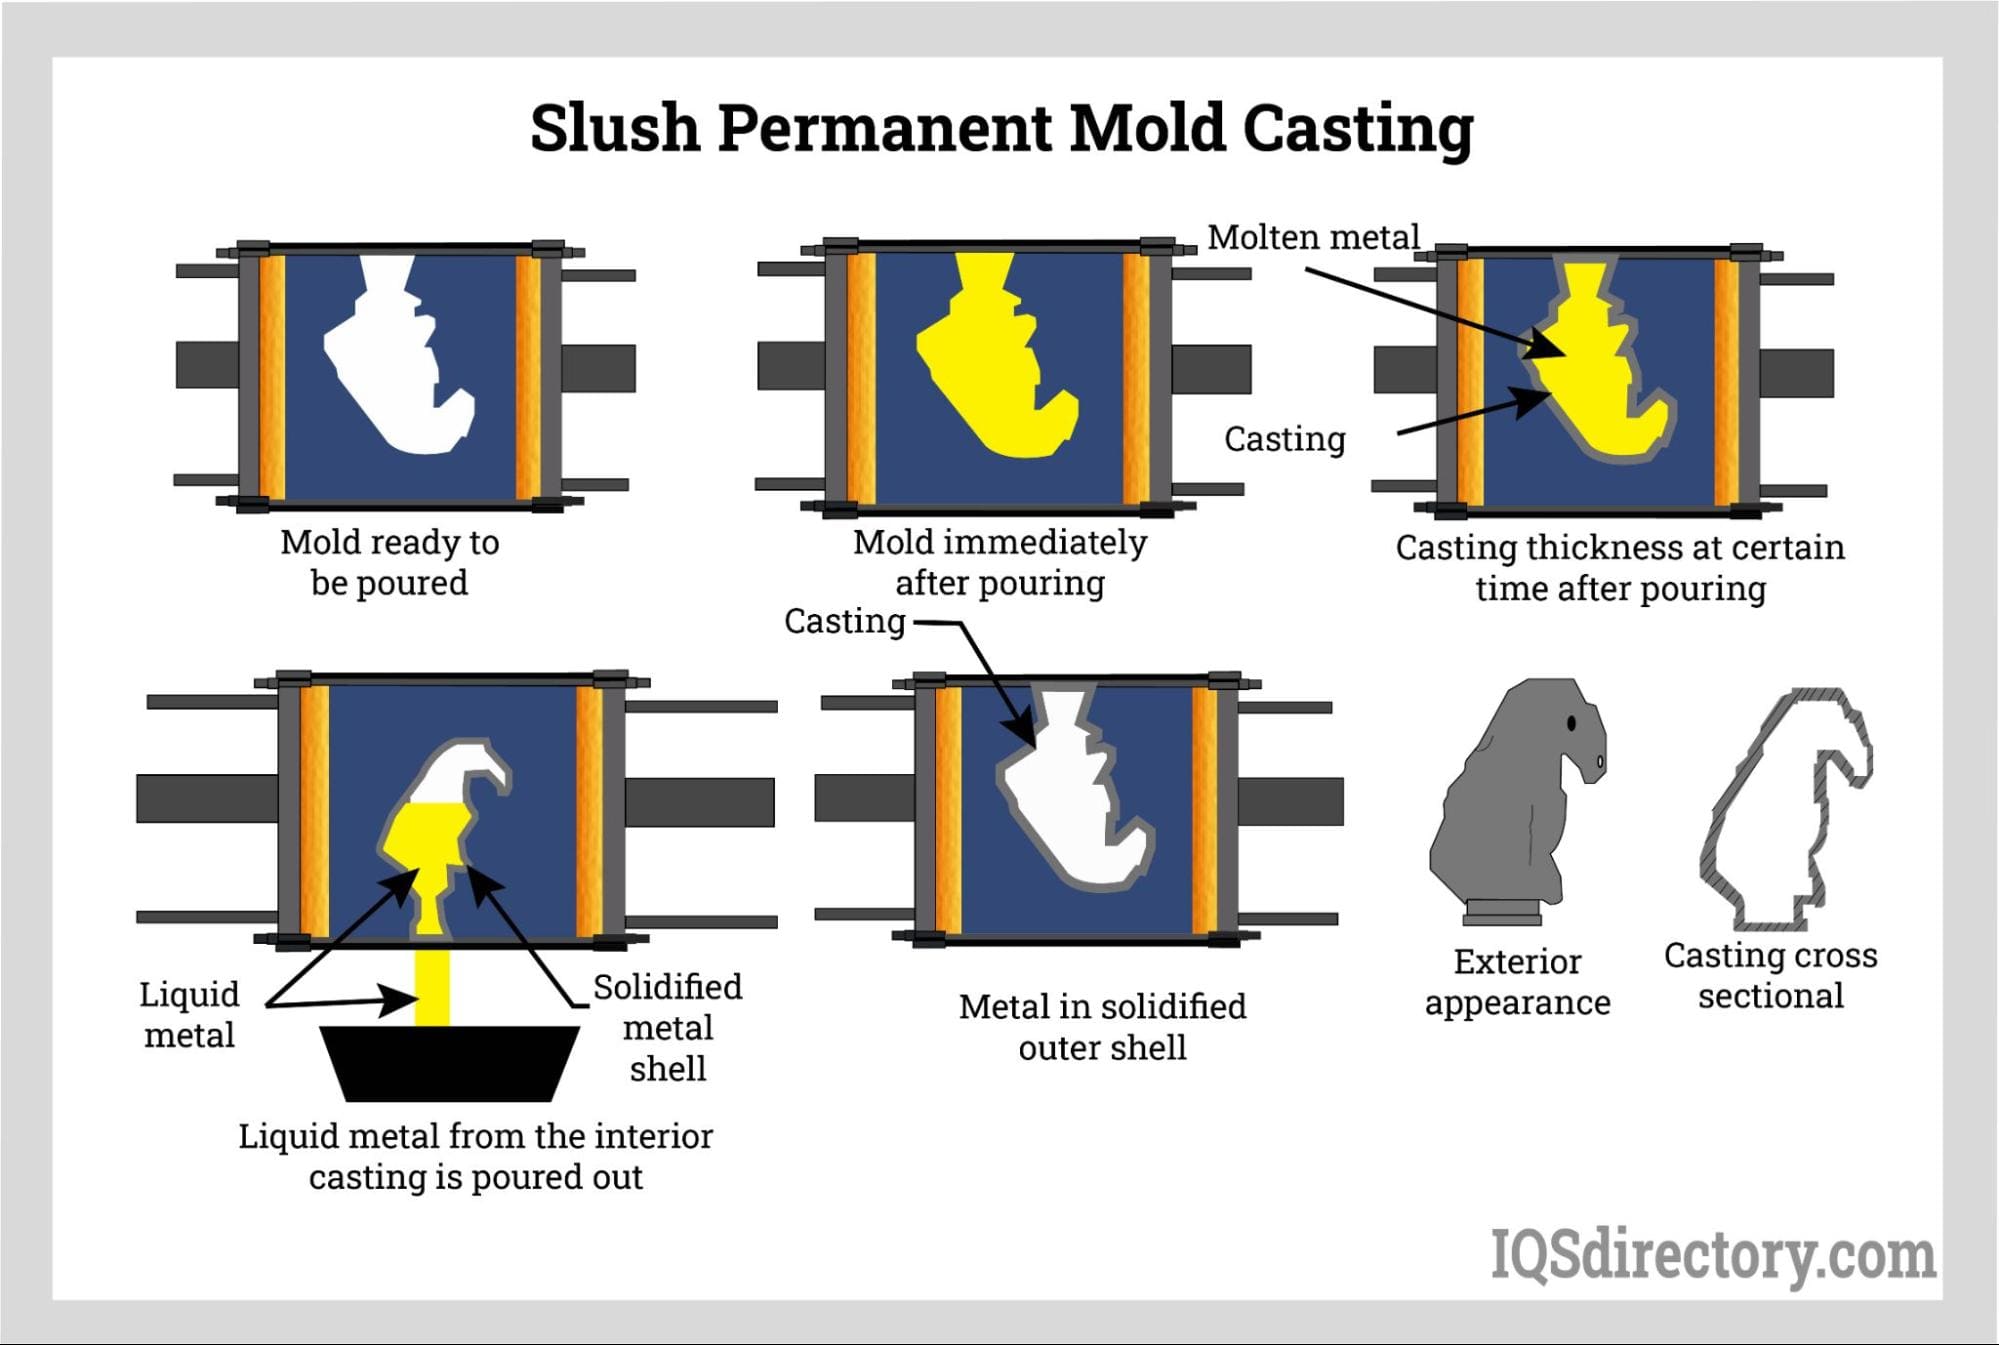 Slush Permanent Mold Casting